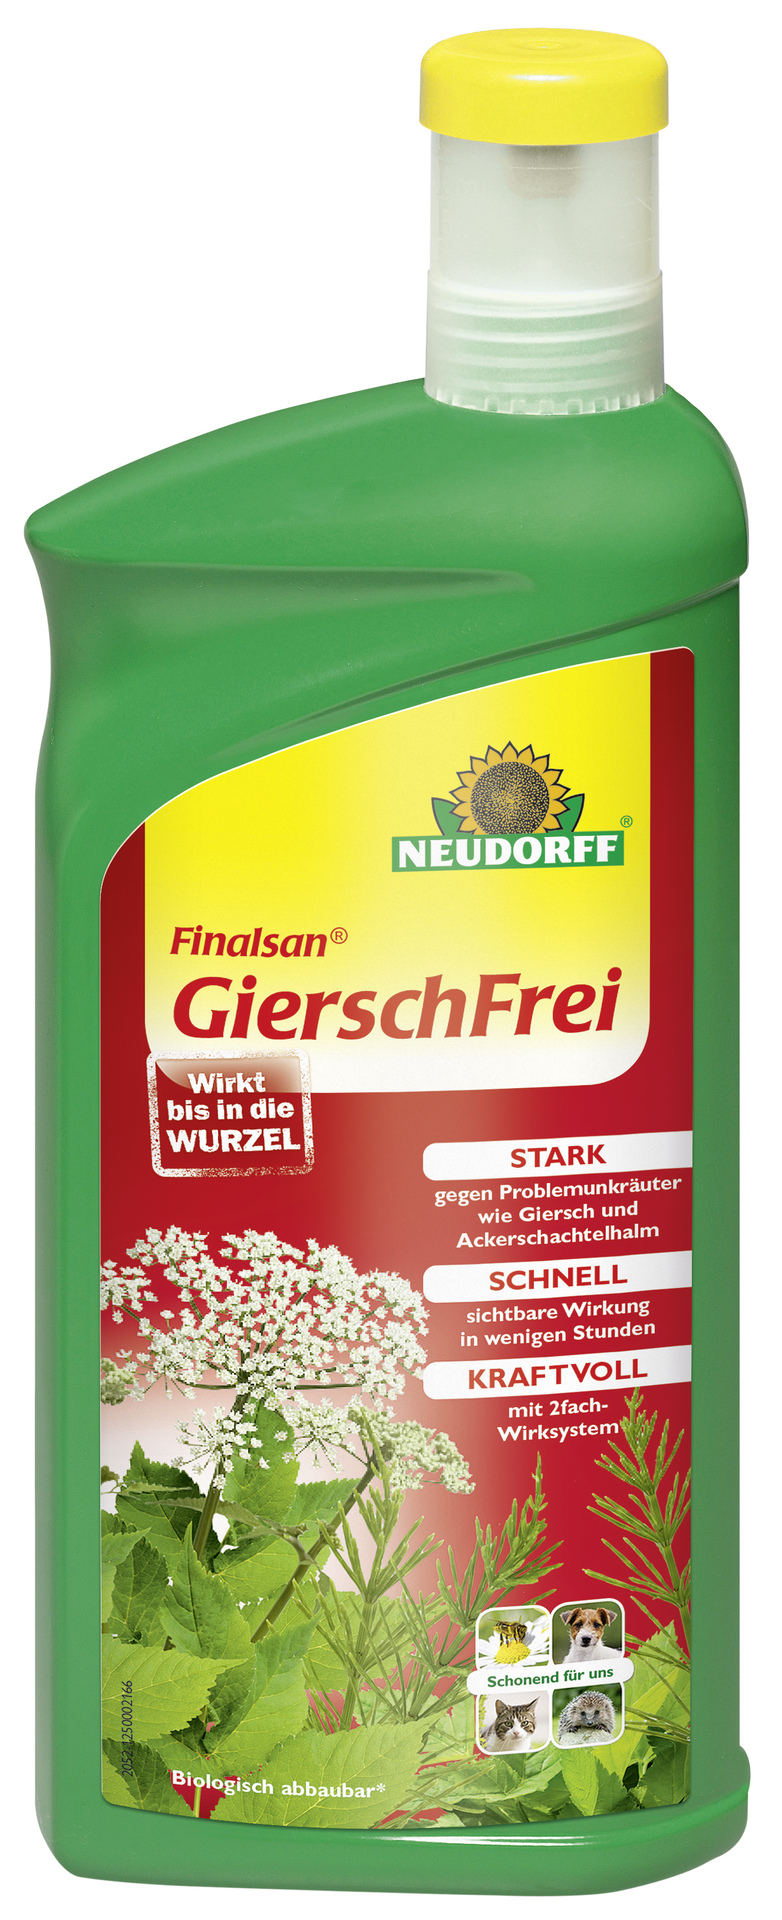 W. Neudorff GmbH KG Finalsan GierschFrei